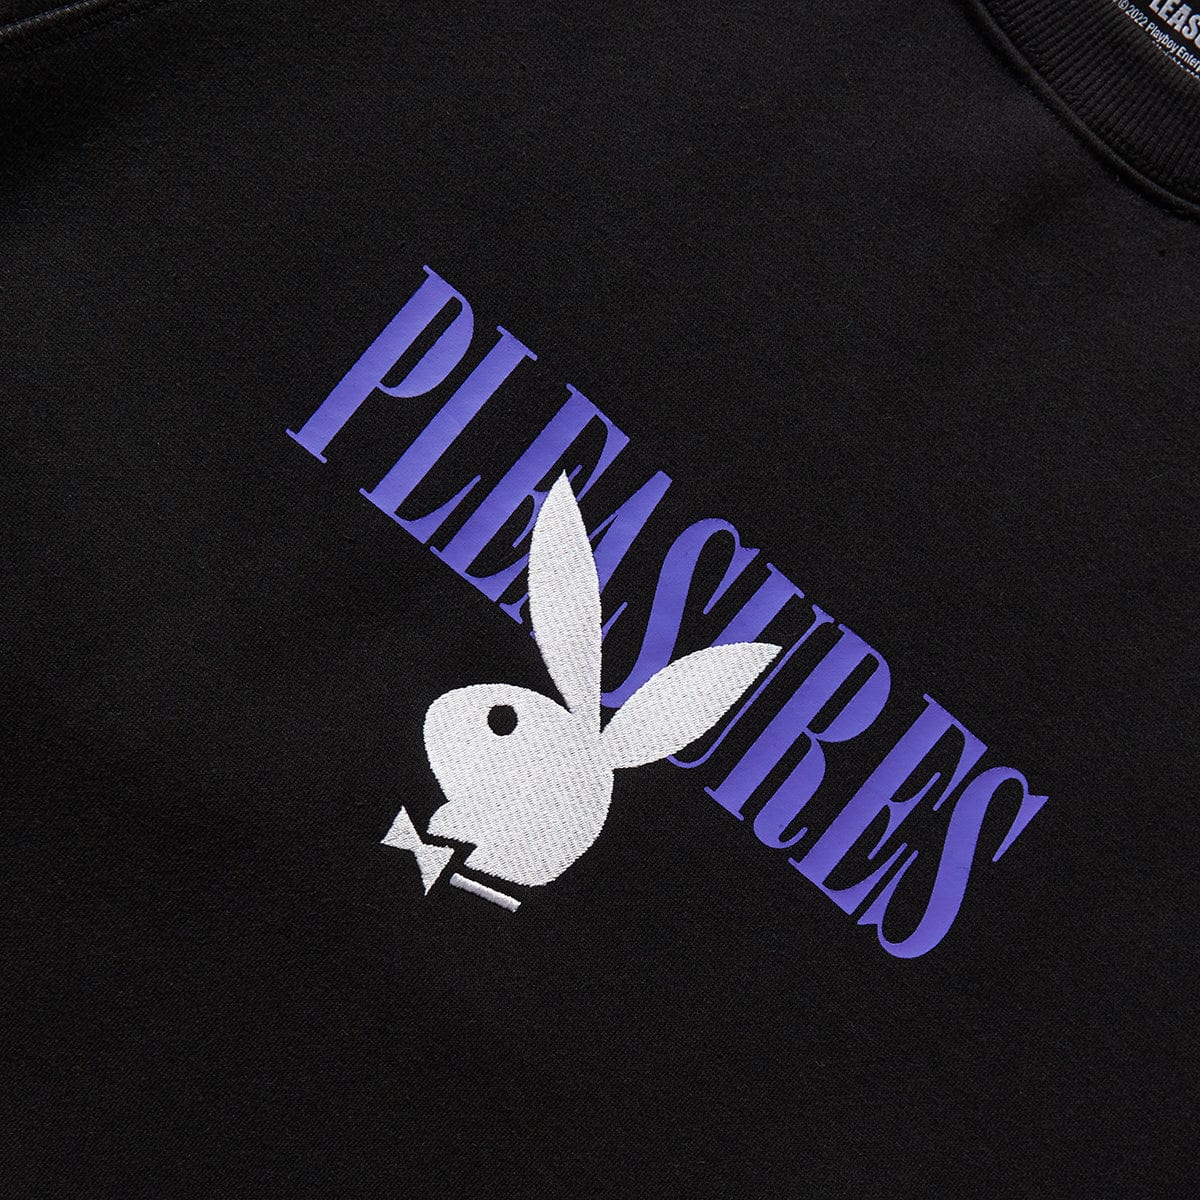 Playboy Louie Vuitton, Tops, New Black Printed Playboy Louis Vuitton Xl  Tee